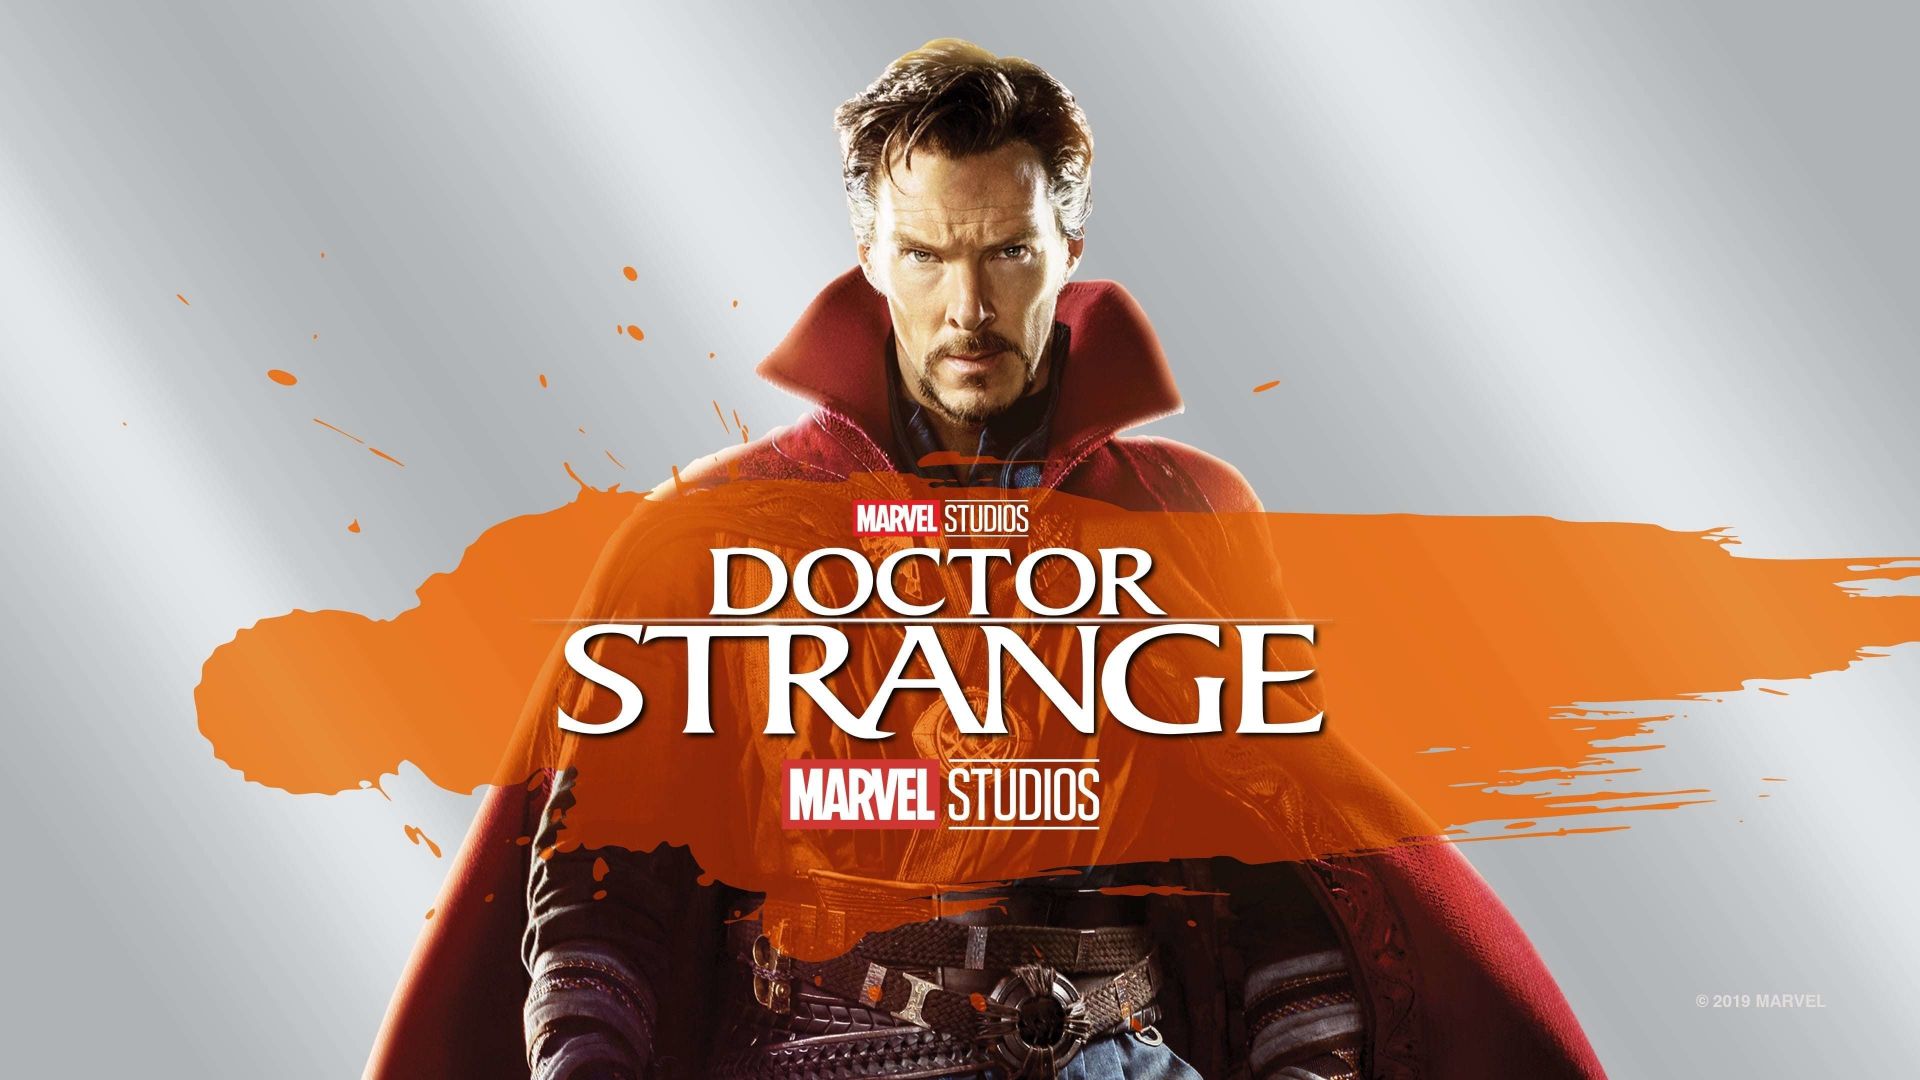 Desktop Wallpaper Doctor Strange, Superhero, Marvel Studio, Hd Image,  Picture, Background, 5d5668